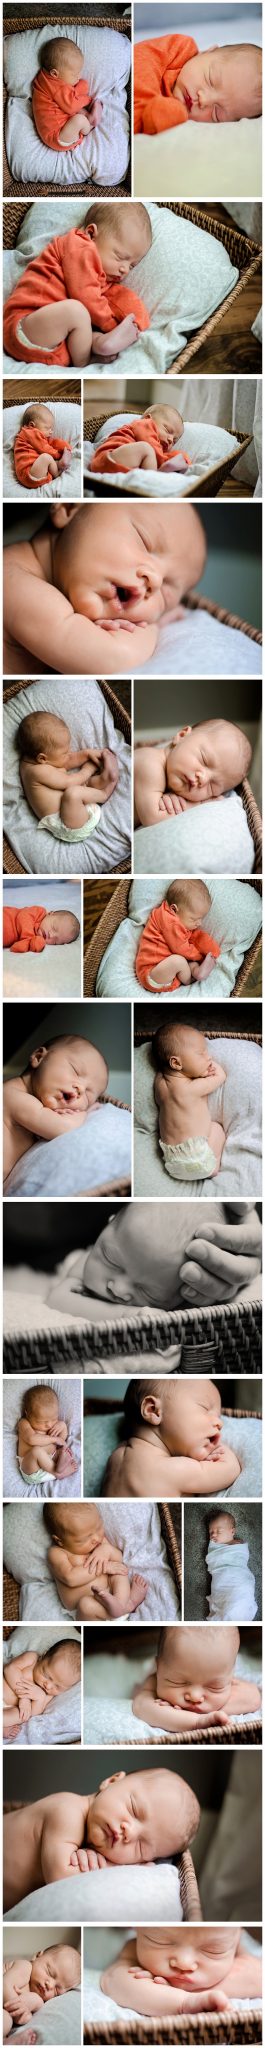 Welcome Baby Zebulun - Lifestyle Newborn Session - Posed Newborn